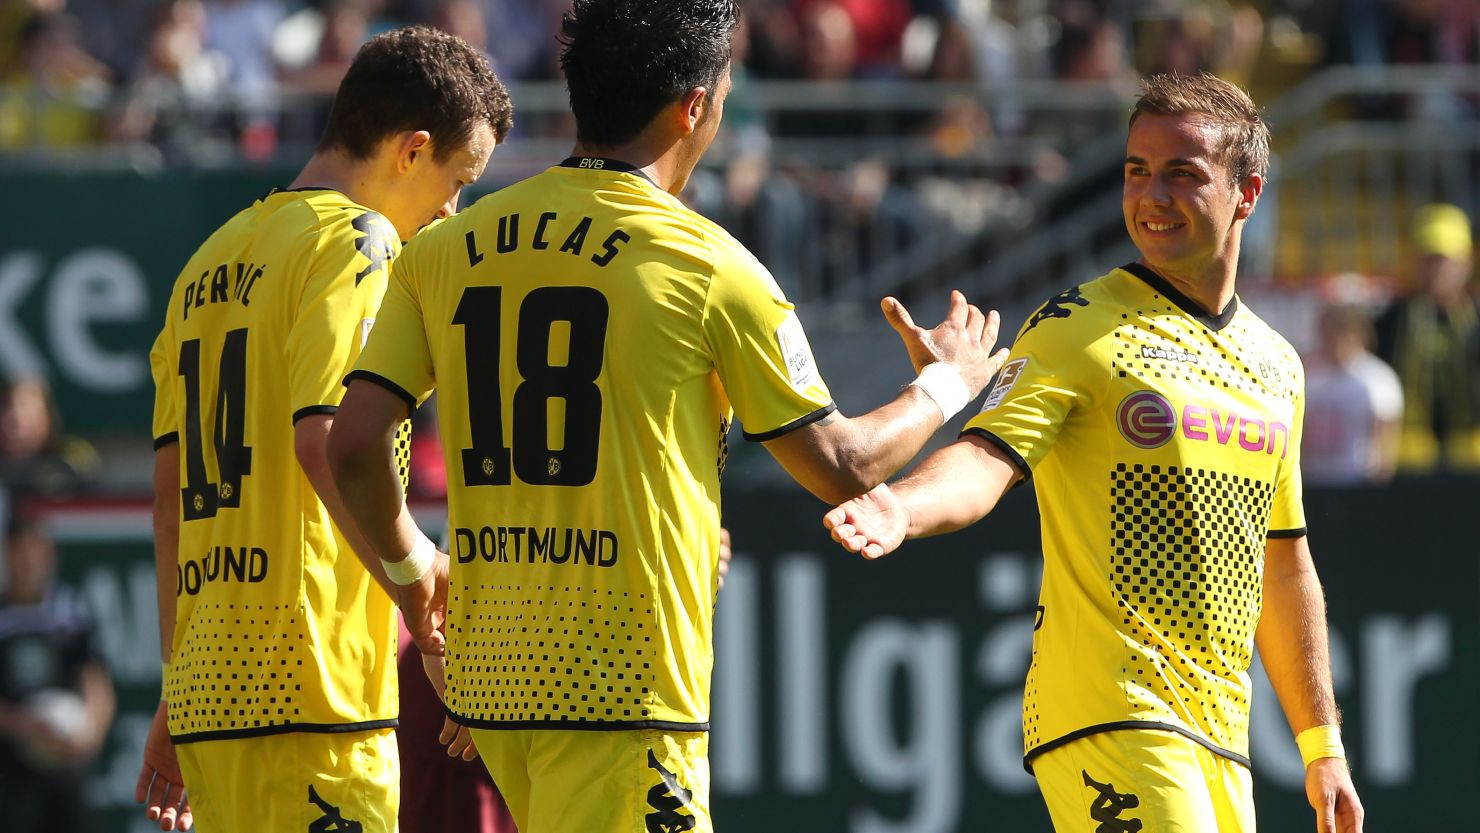 Dortmund striker Lucas Barrios scored a hat-trick in Jurgen Klopp's team 5-2 demolition of Kaiserslautern